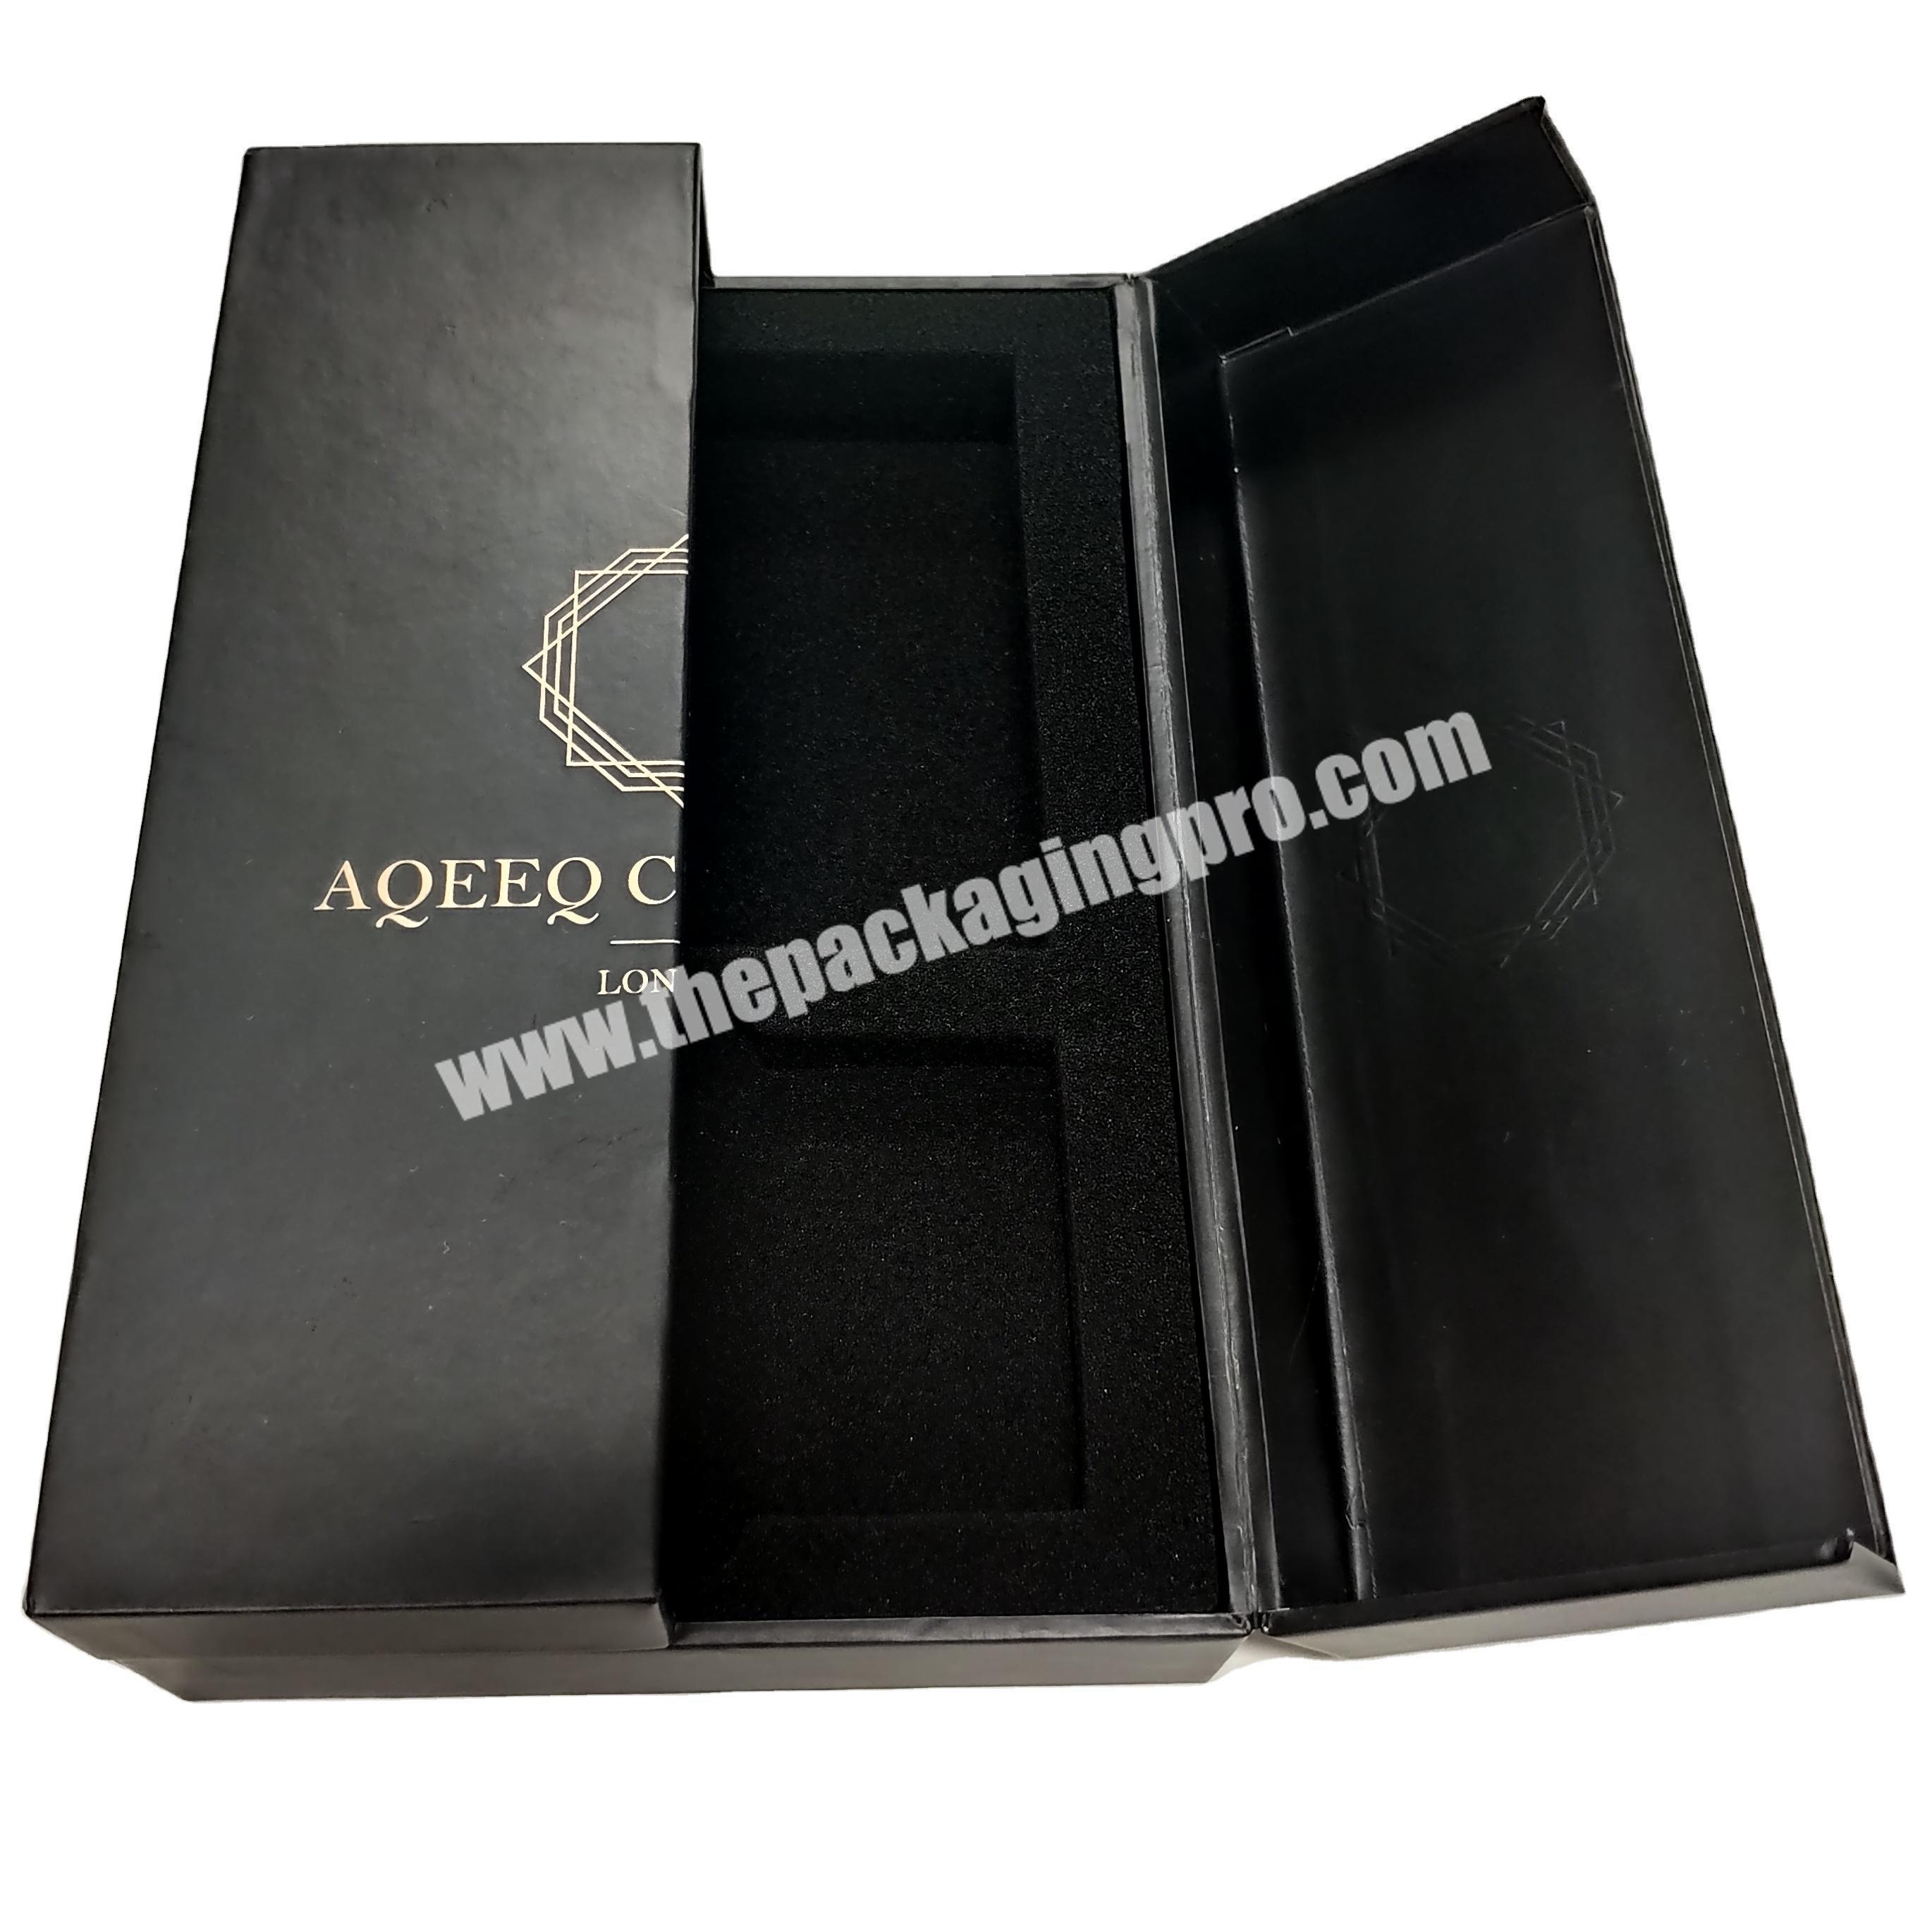 Flap Lid Packaging Cardboard Bespoke Folding Shipping Custom Magnetic Closure Gift Box Packaging